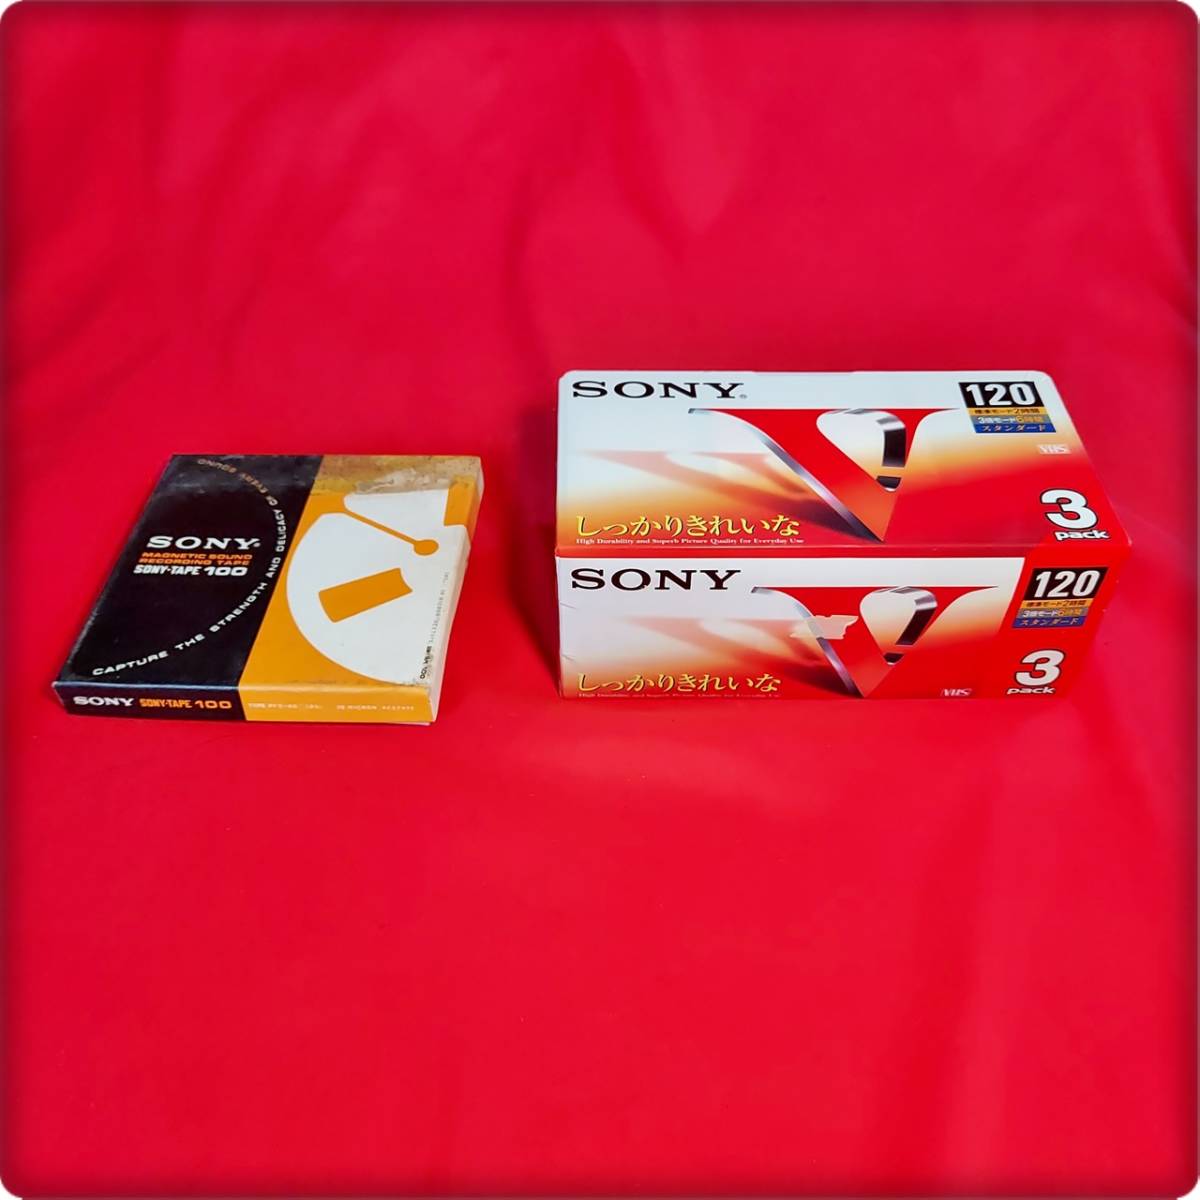 (po) не использовался SONY видео кассетная лента VHS 120 минут 3 упаковка /SONY-TAPE 100 Sony лента открытый катушка катушка лента 2 шт. комплект текущее состояние товар 